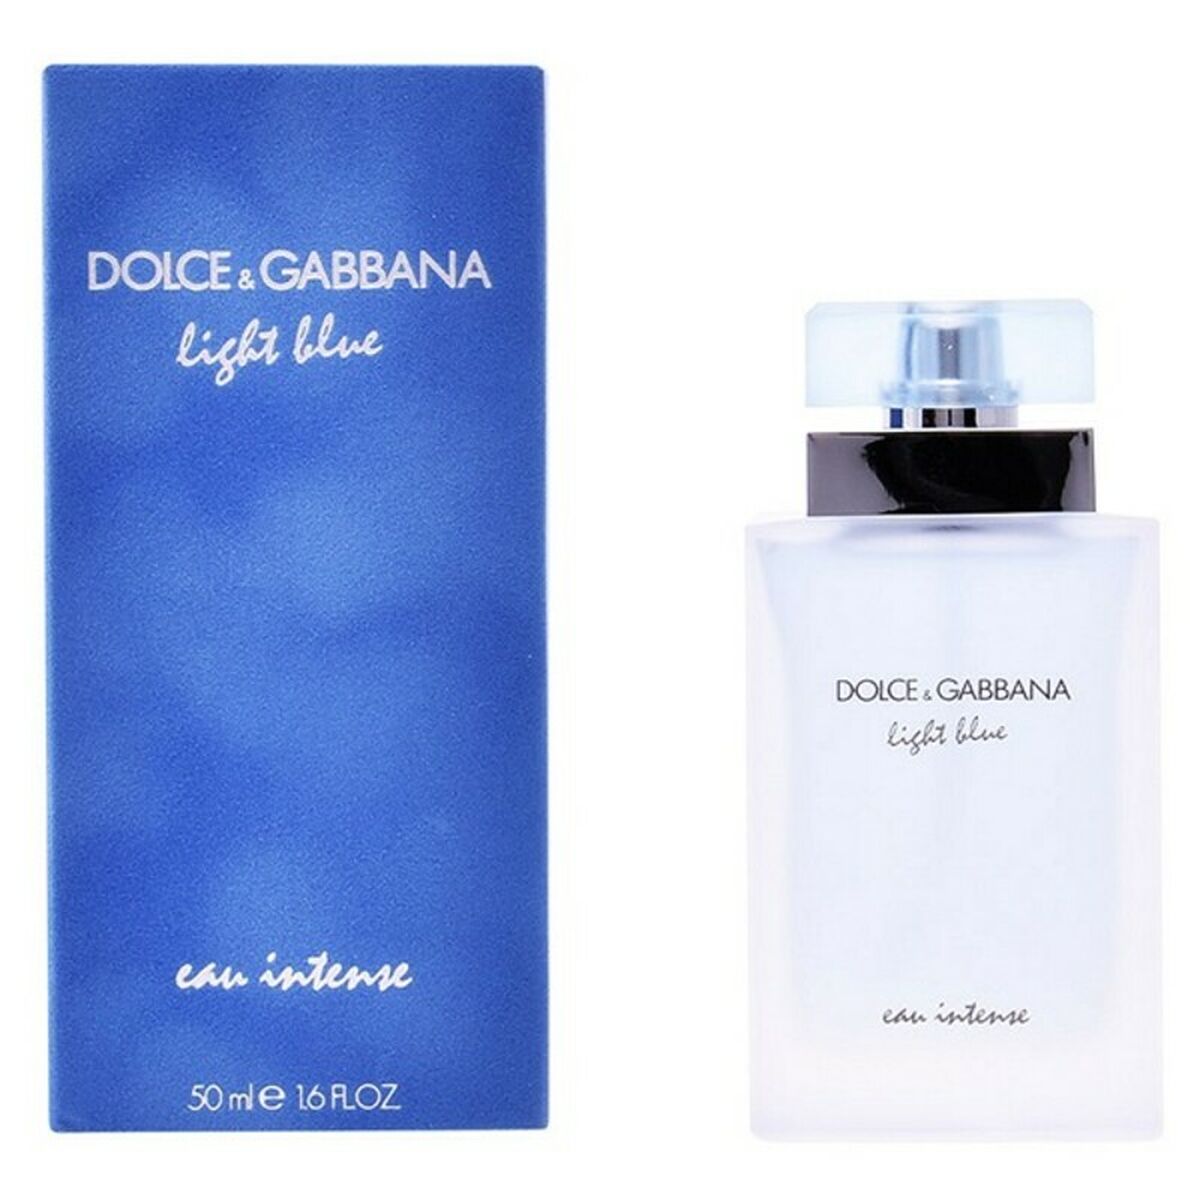 Women's Perfume Light Blue Intense Dolce & Gabbana EDP